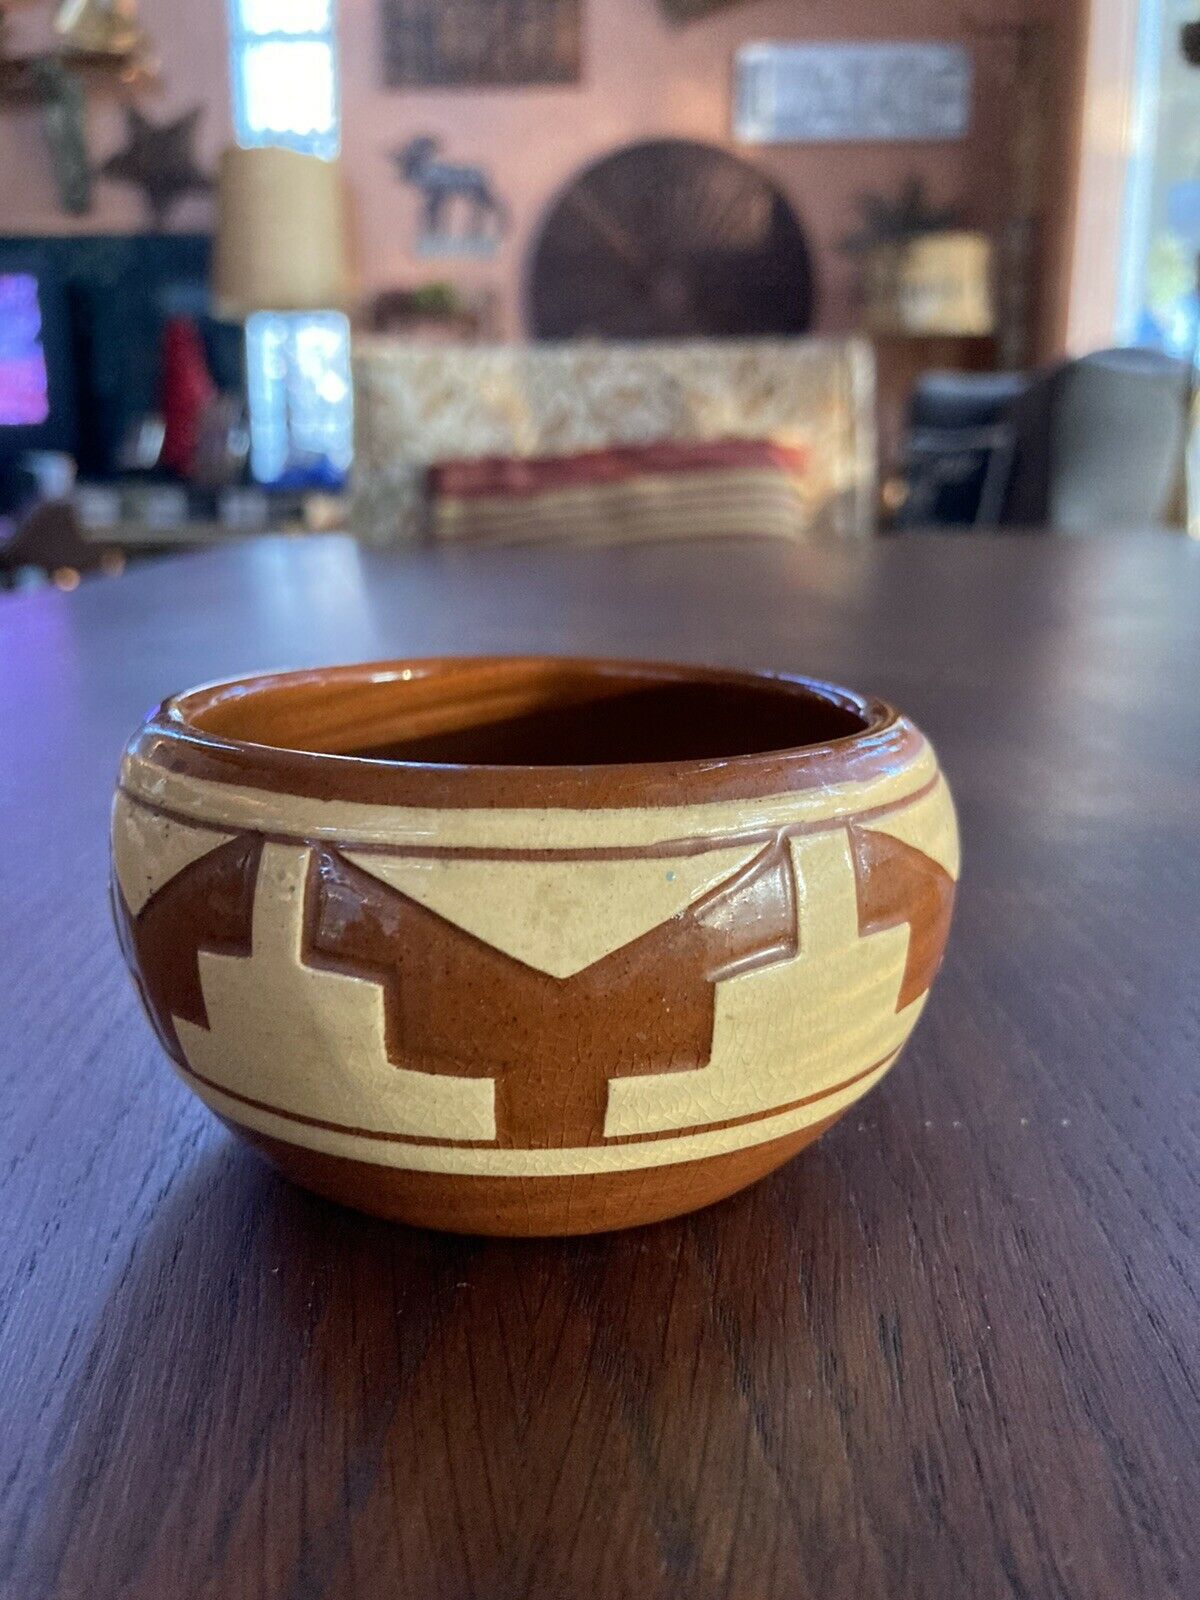 Pine Ridge Sioux Indian Art Pottery Vase Bowl Pot Signed Olive Cottier